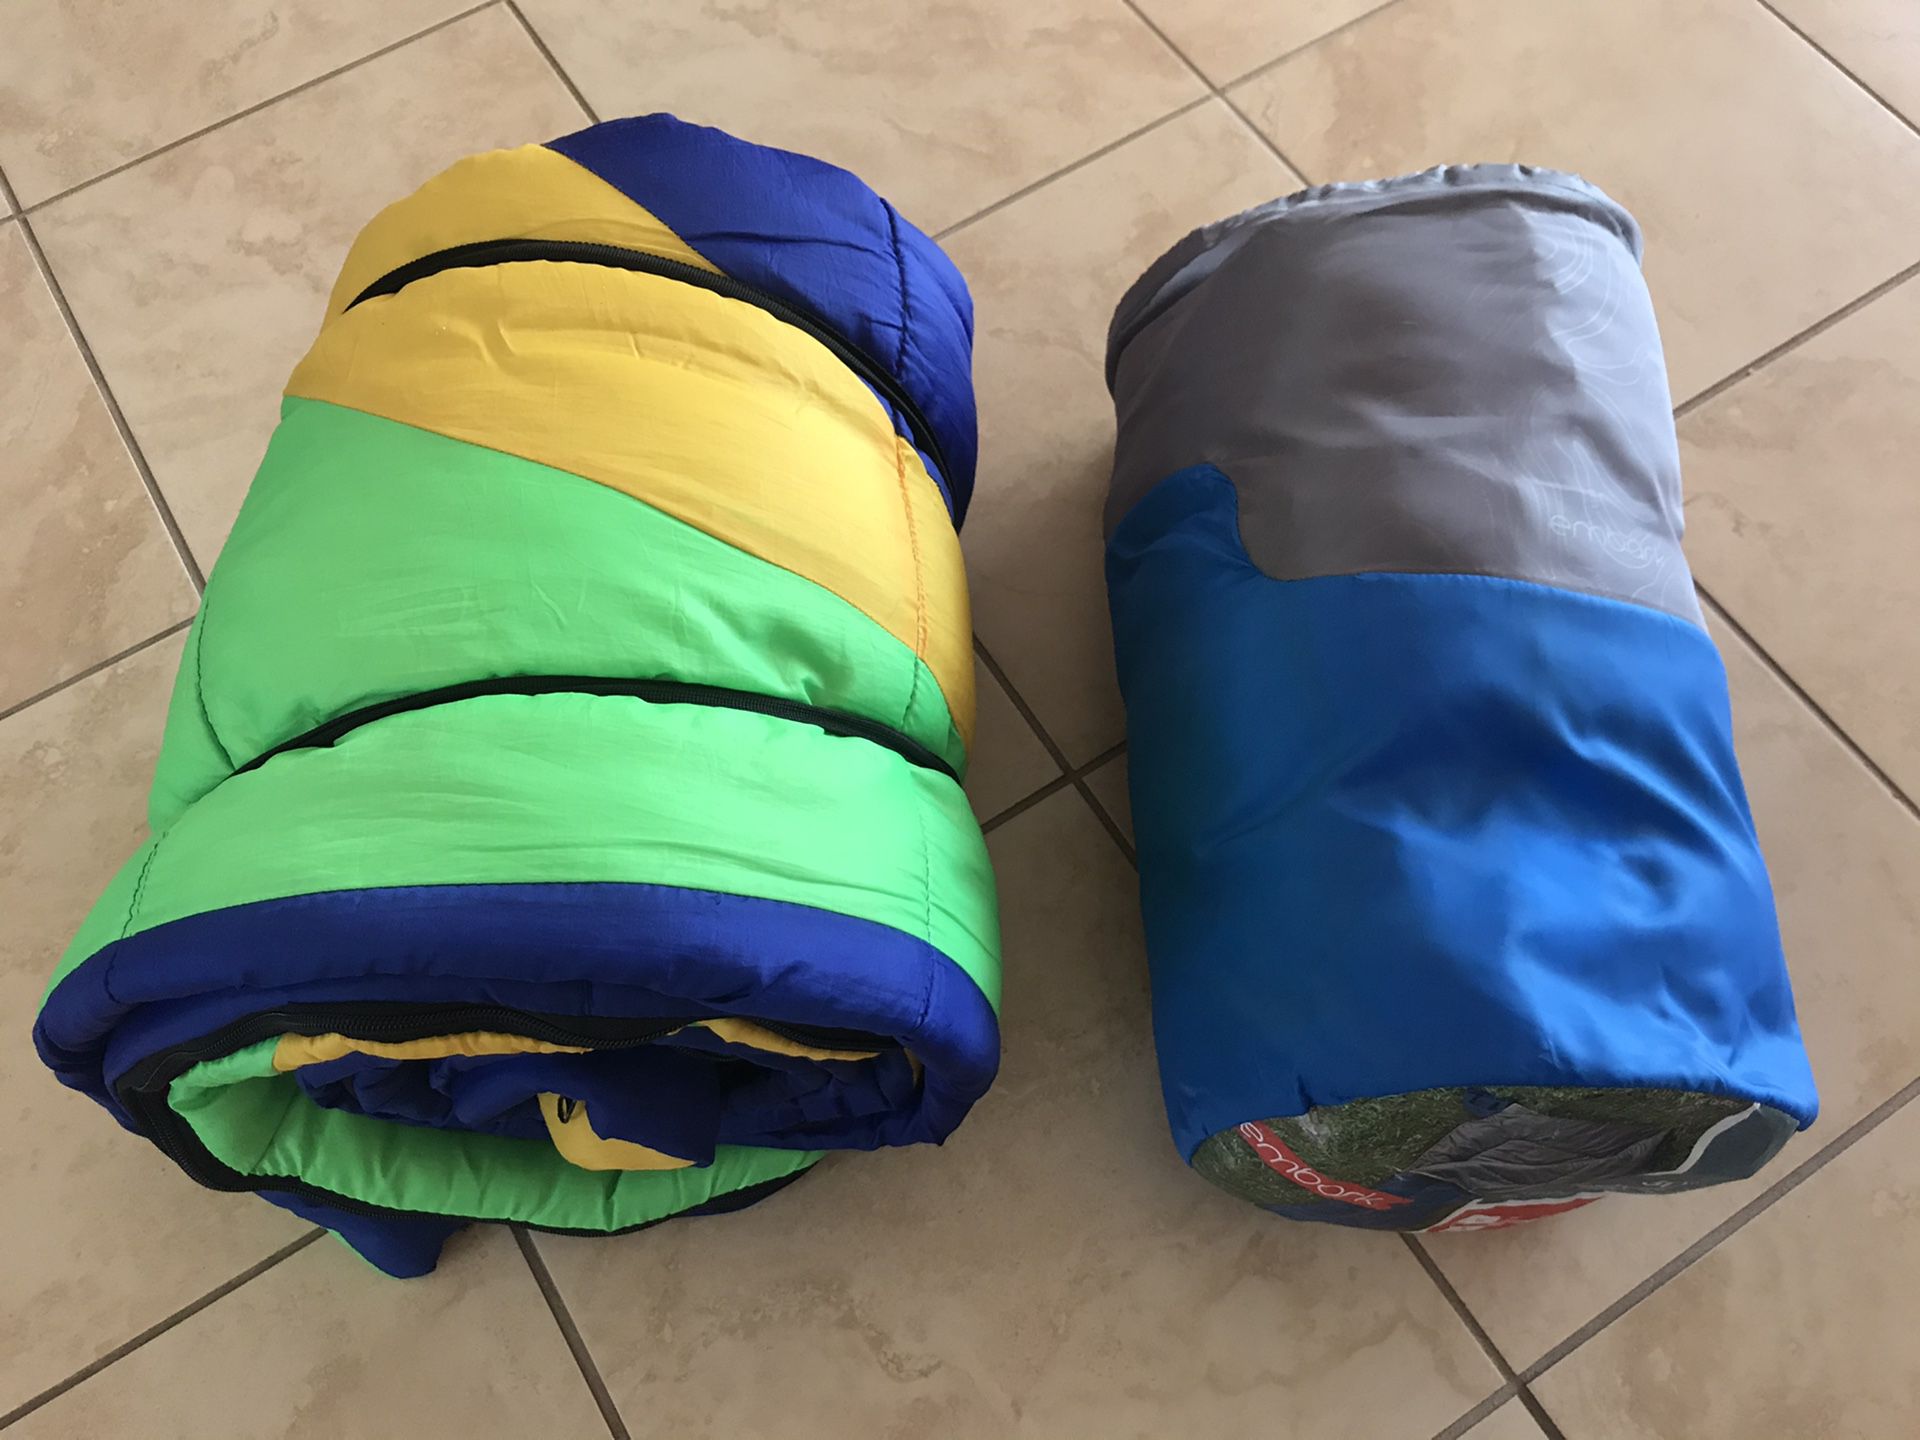 Youth sleeping bags